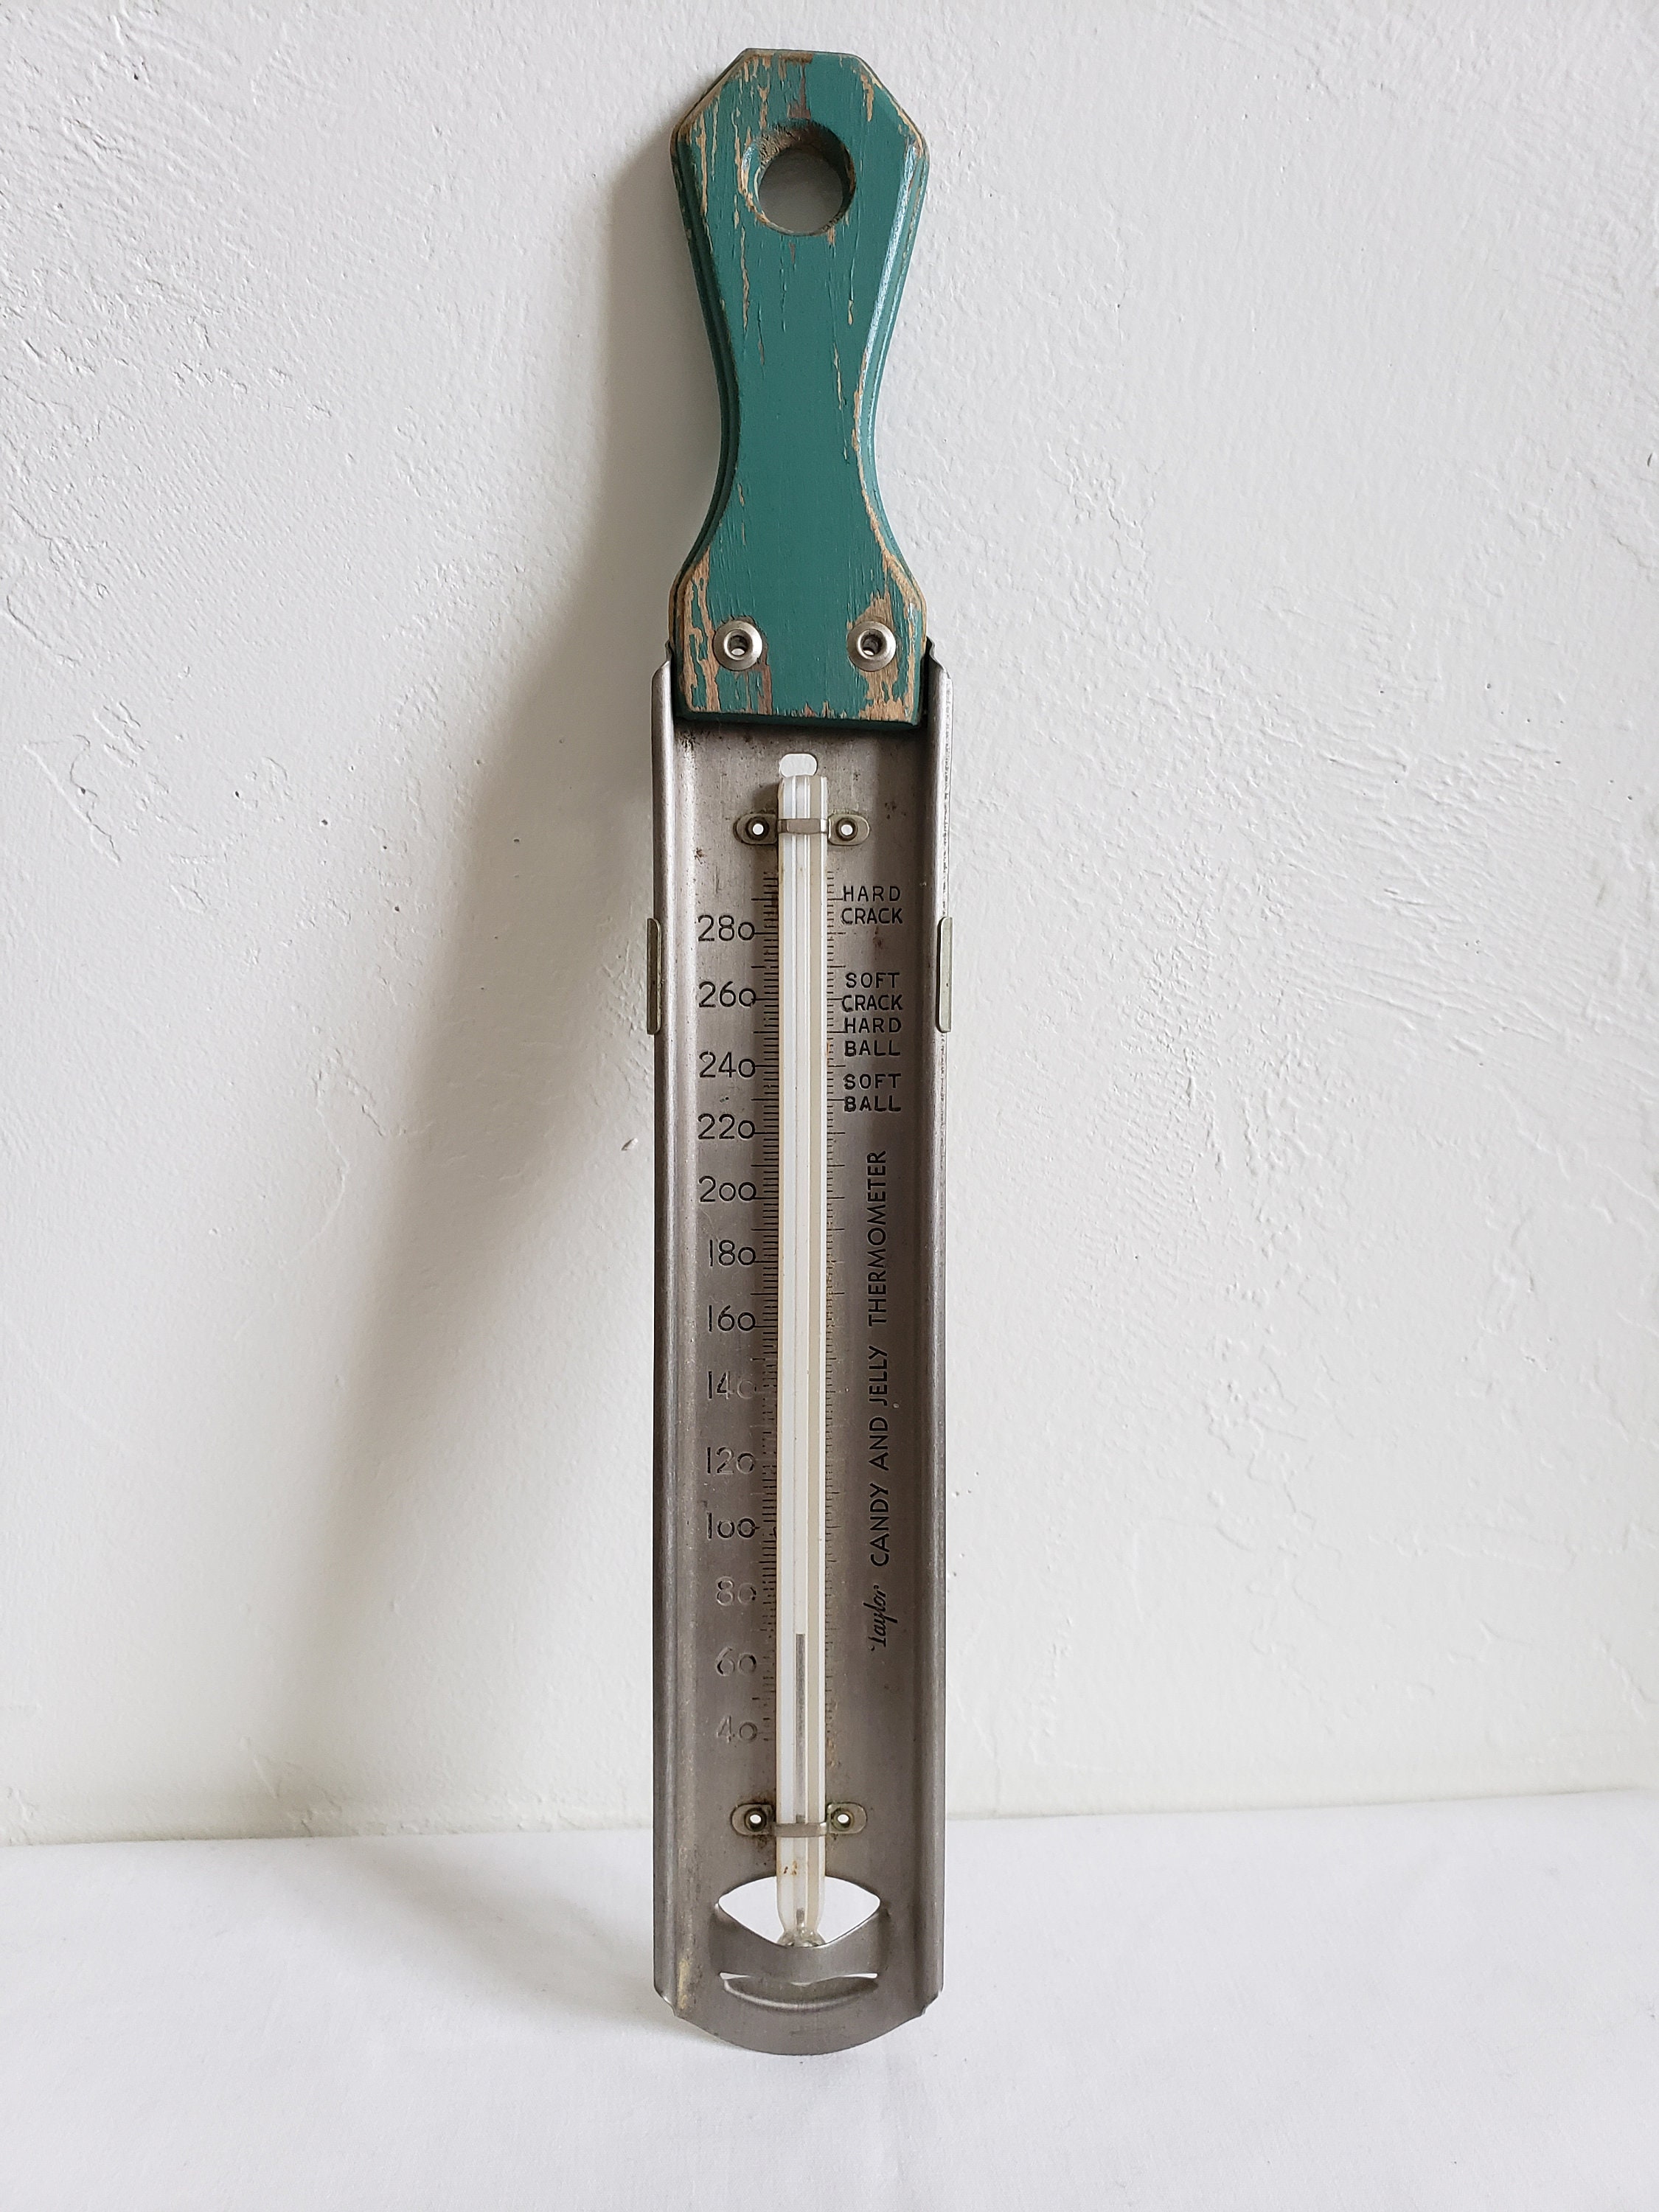 Taylor Refridgerator & Freezer Thermometer Made in USA VTG 1950's